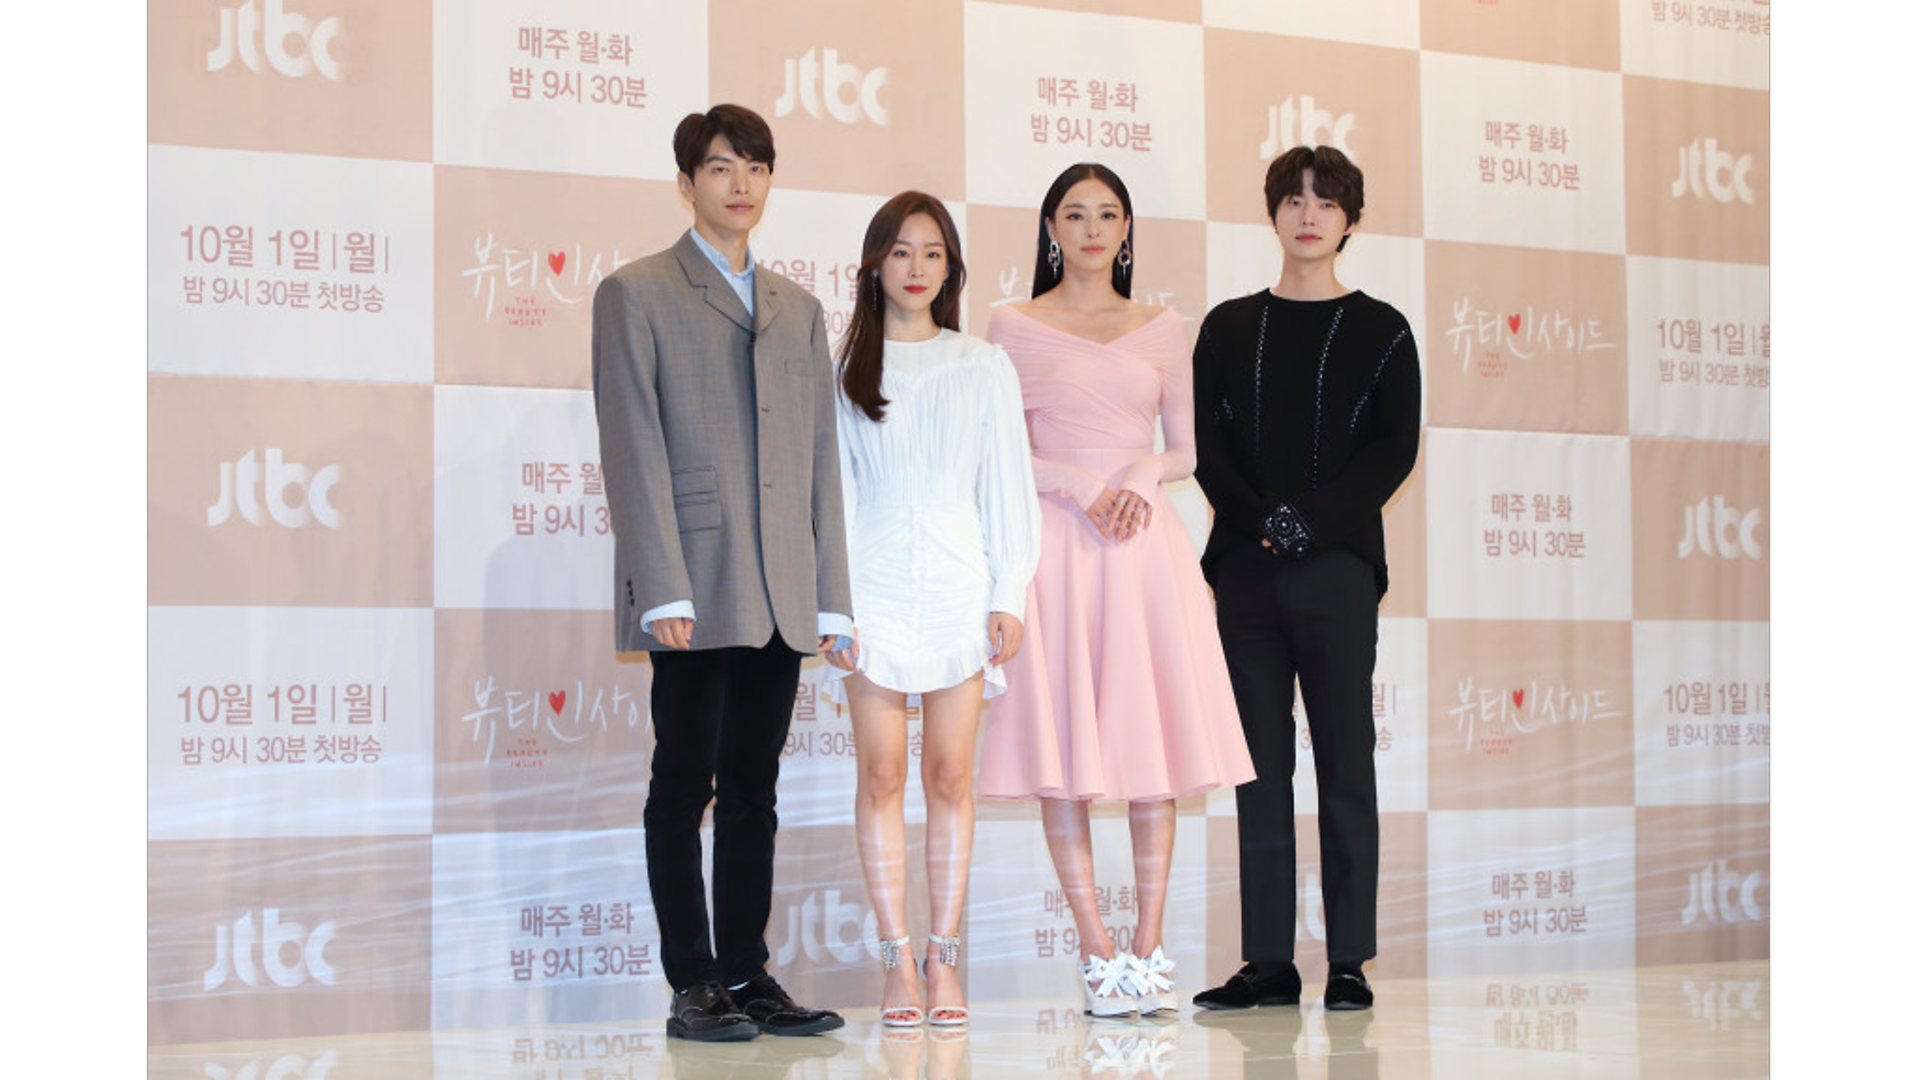 Stars promote new Korean drama 'The Beauty Inside'